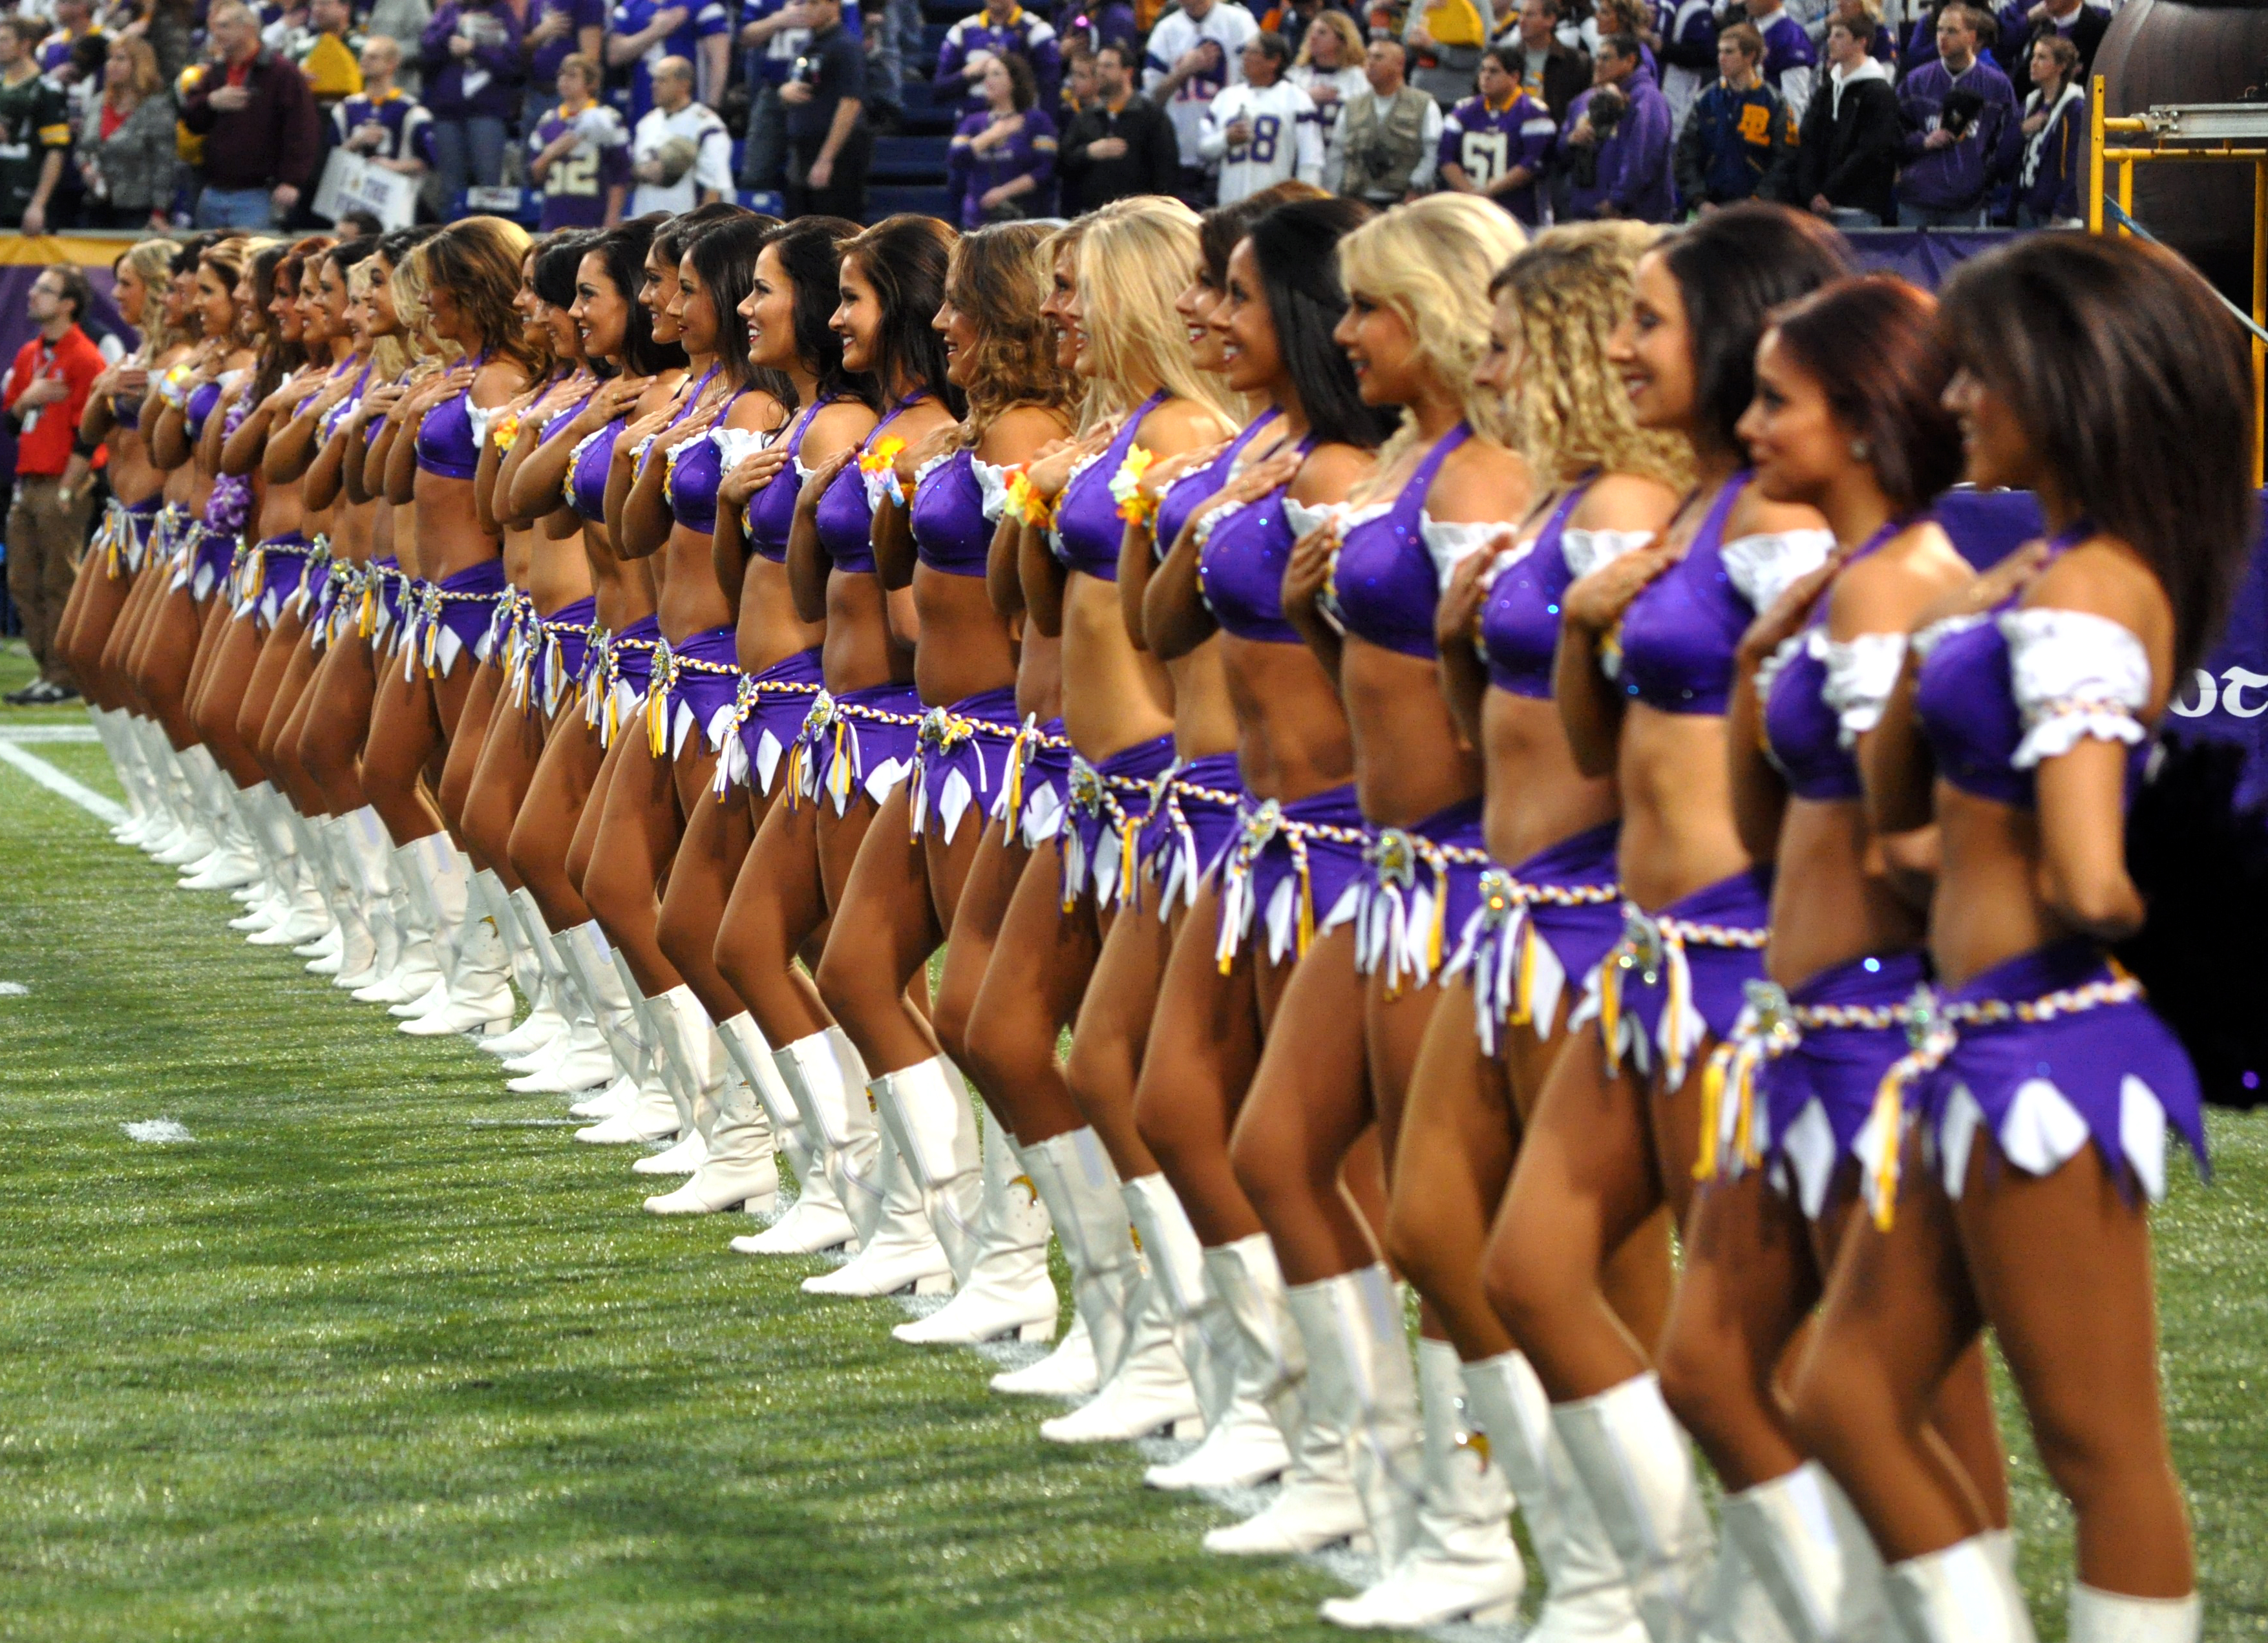 File:MVC - Minnesota Vikings Cheerleaders.jpg - Wikimedia Commons